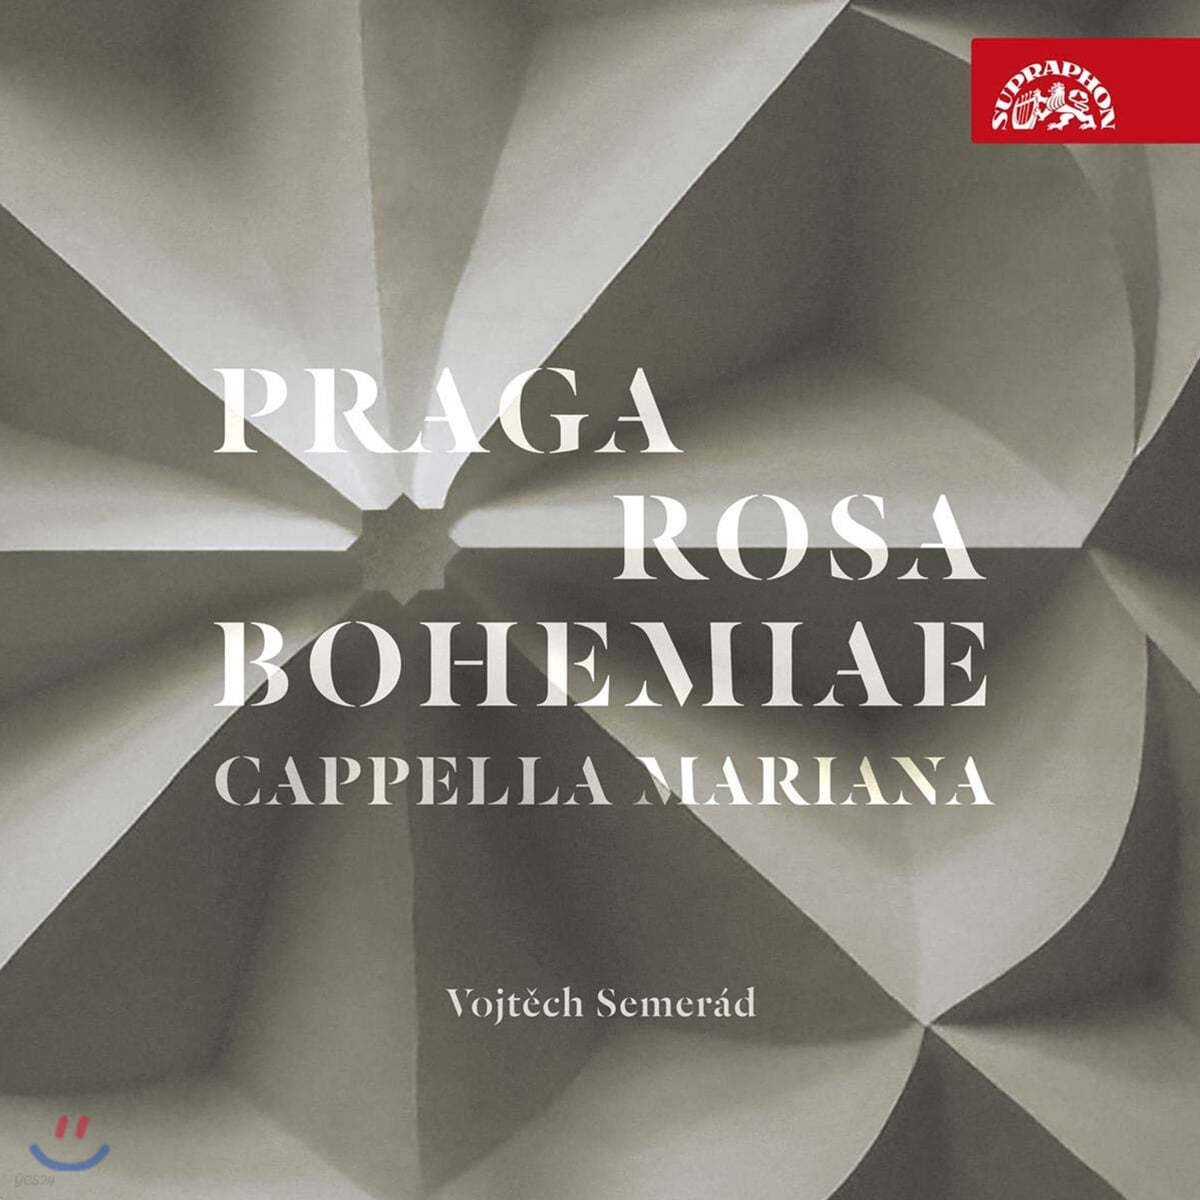 Cappella Mariana 르네상스 시대 프라하의 음악 (Praga Rosa Bohemiae)